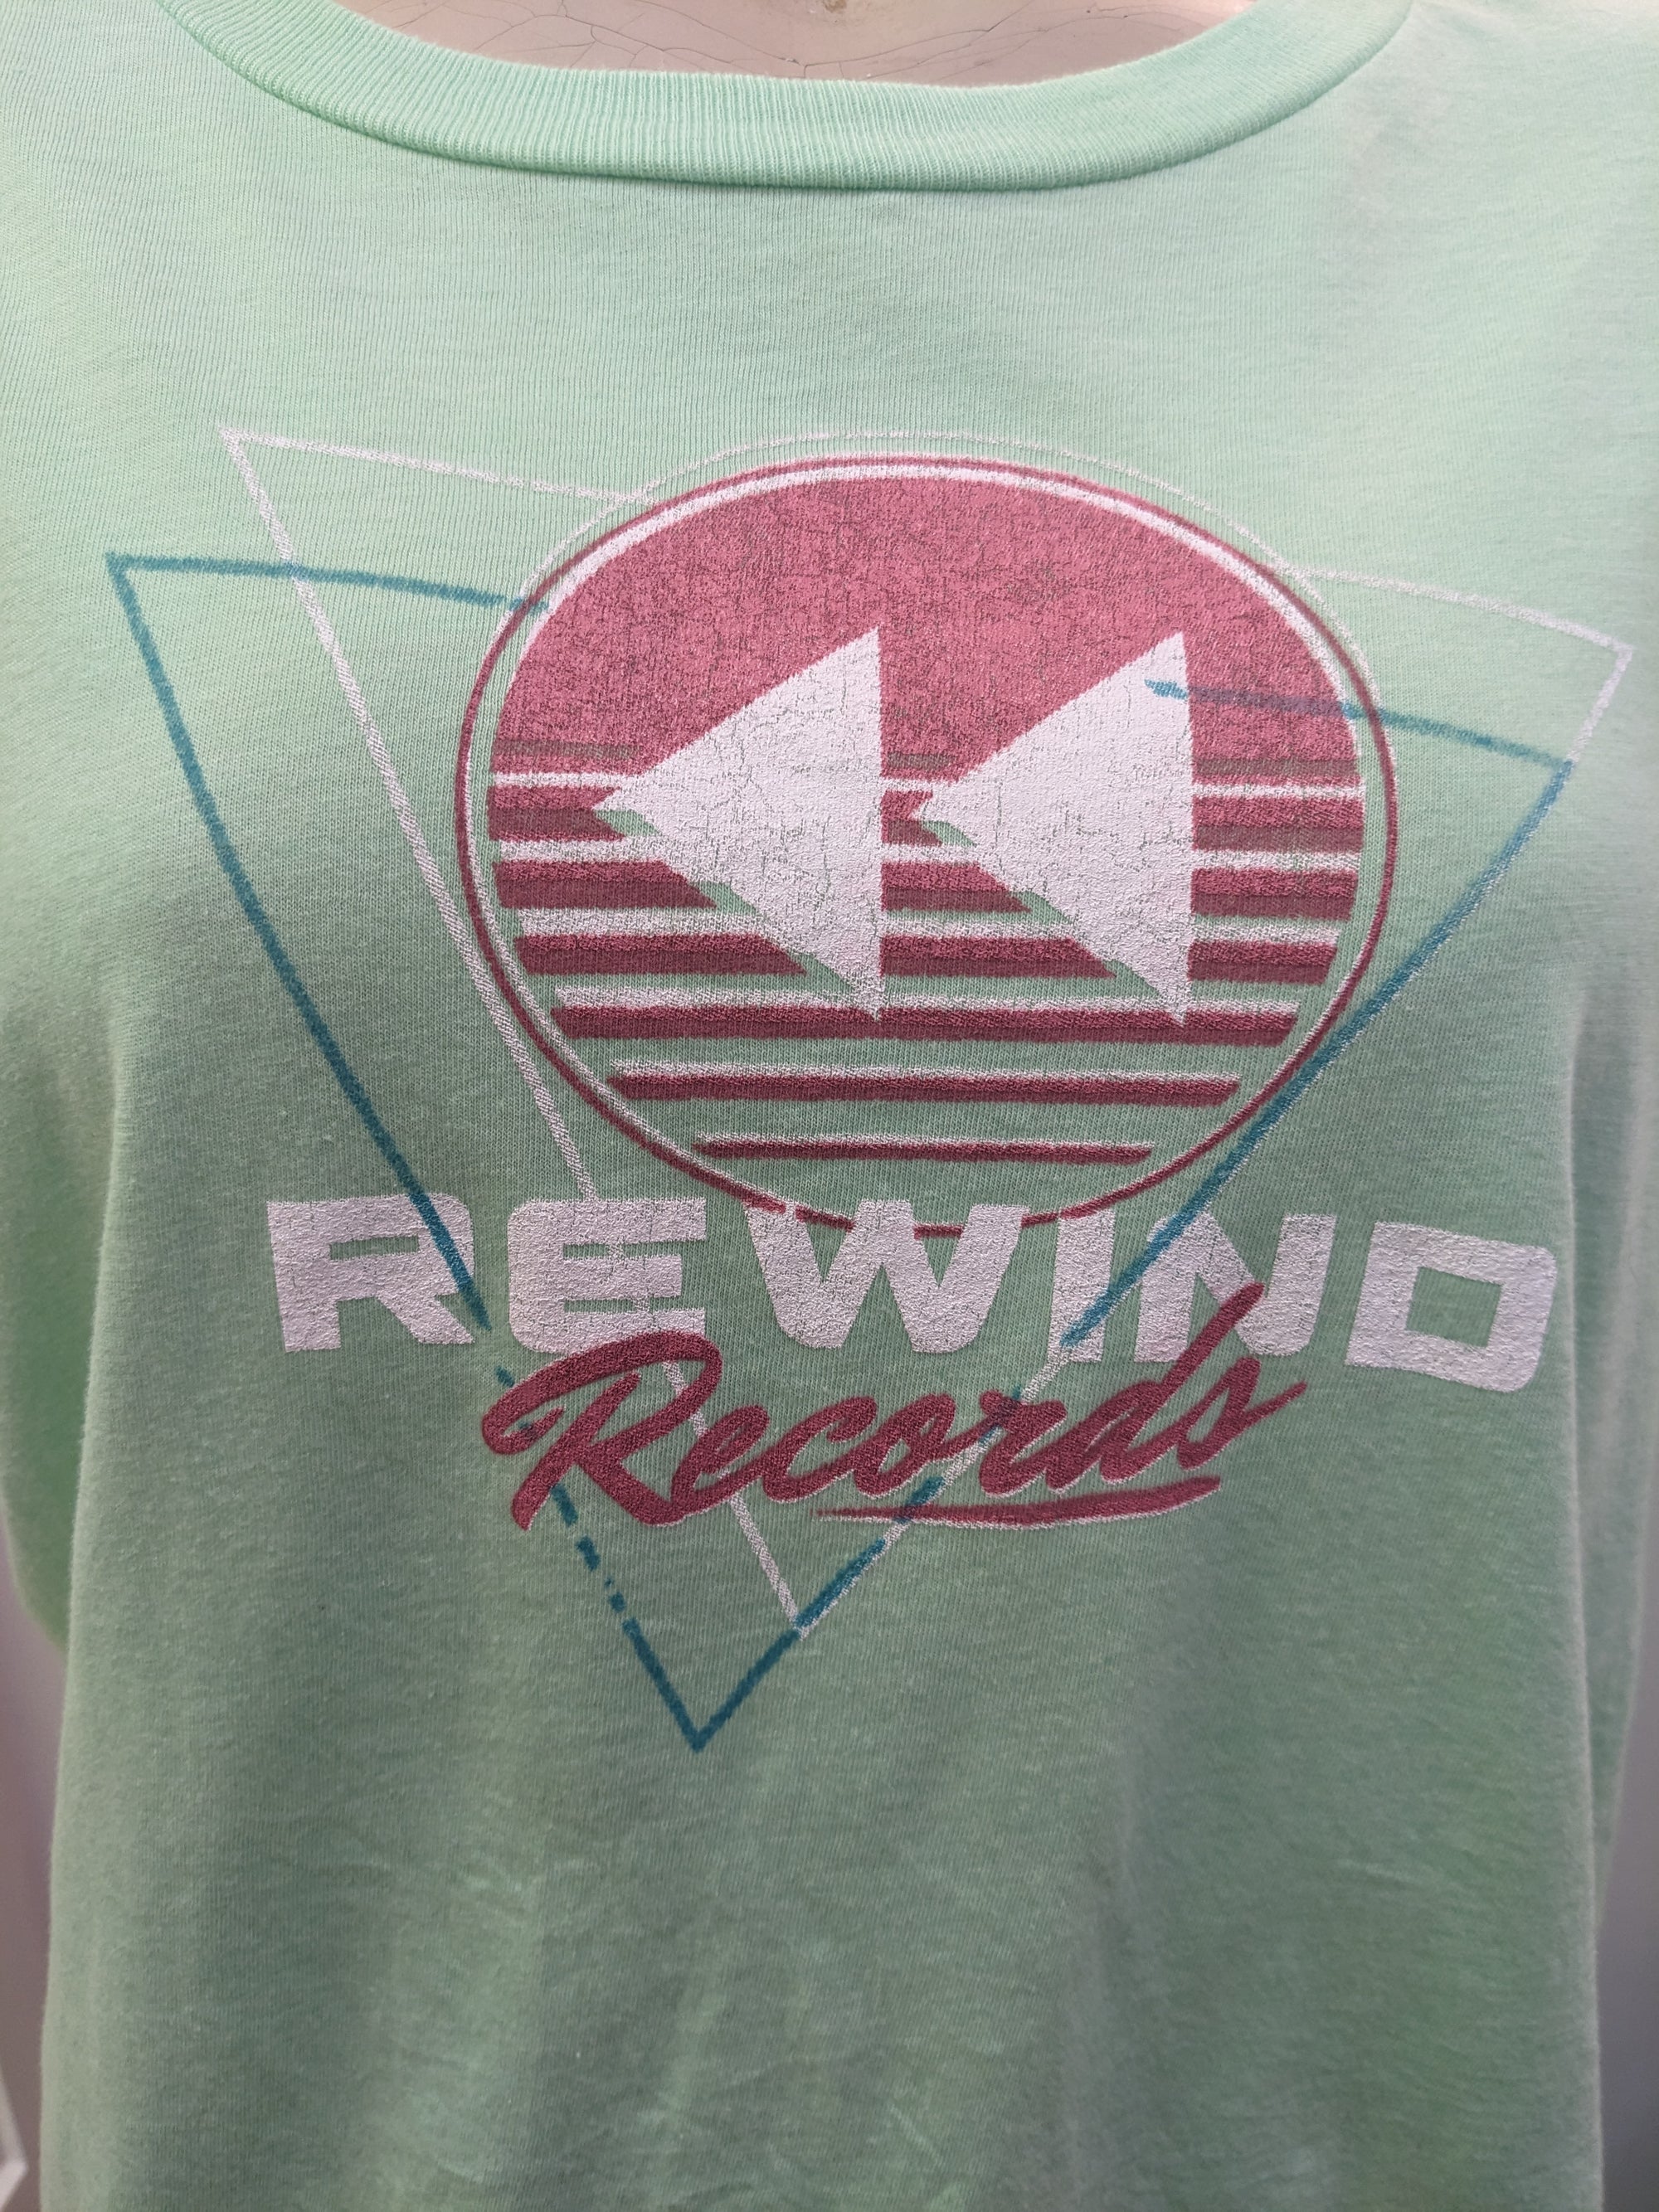 Rewind Records Crop - Large